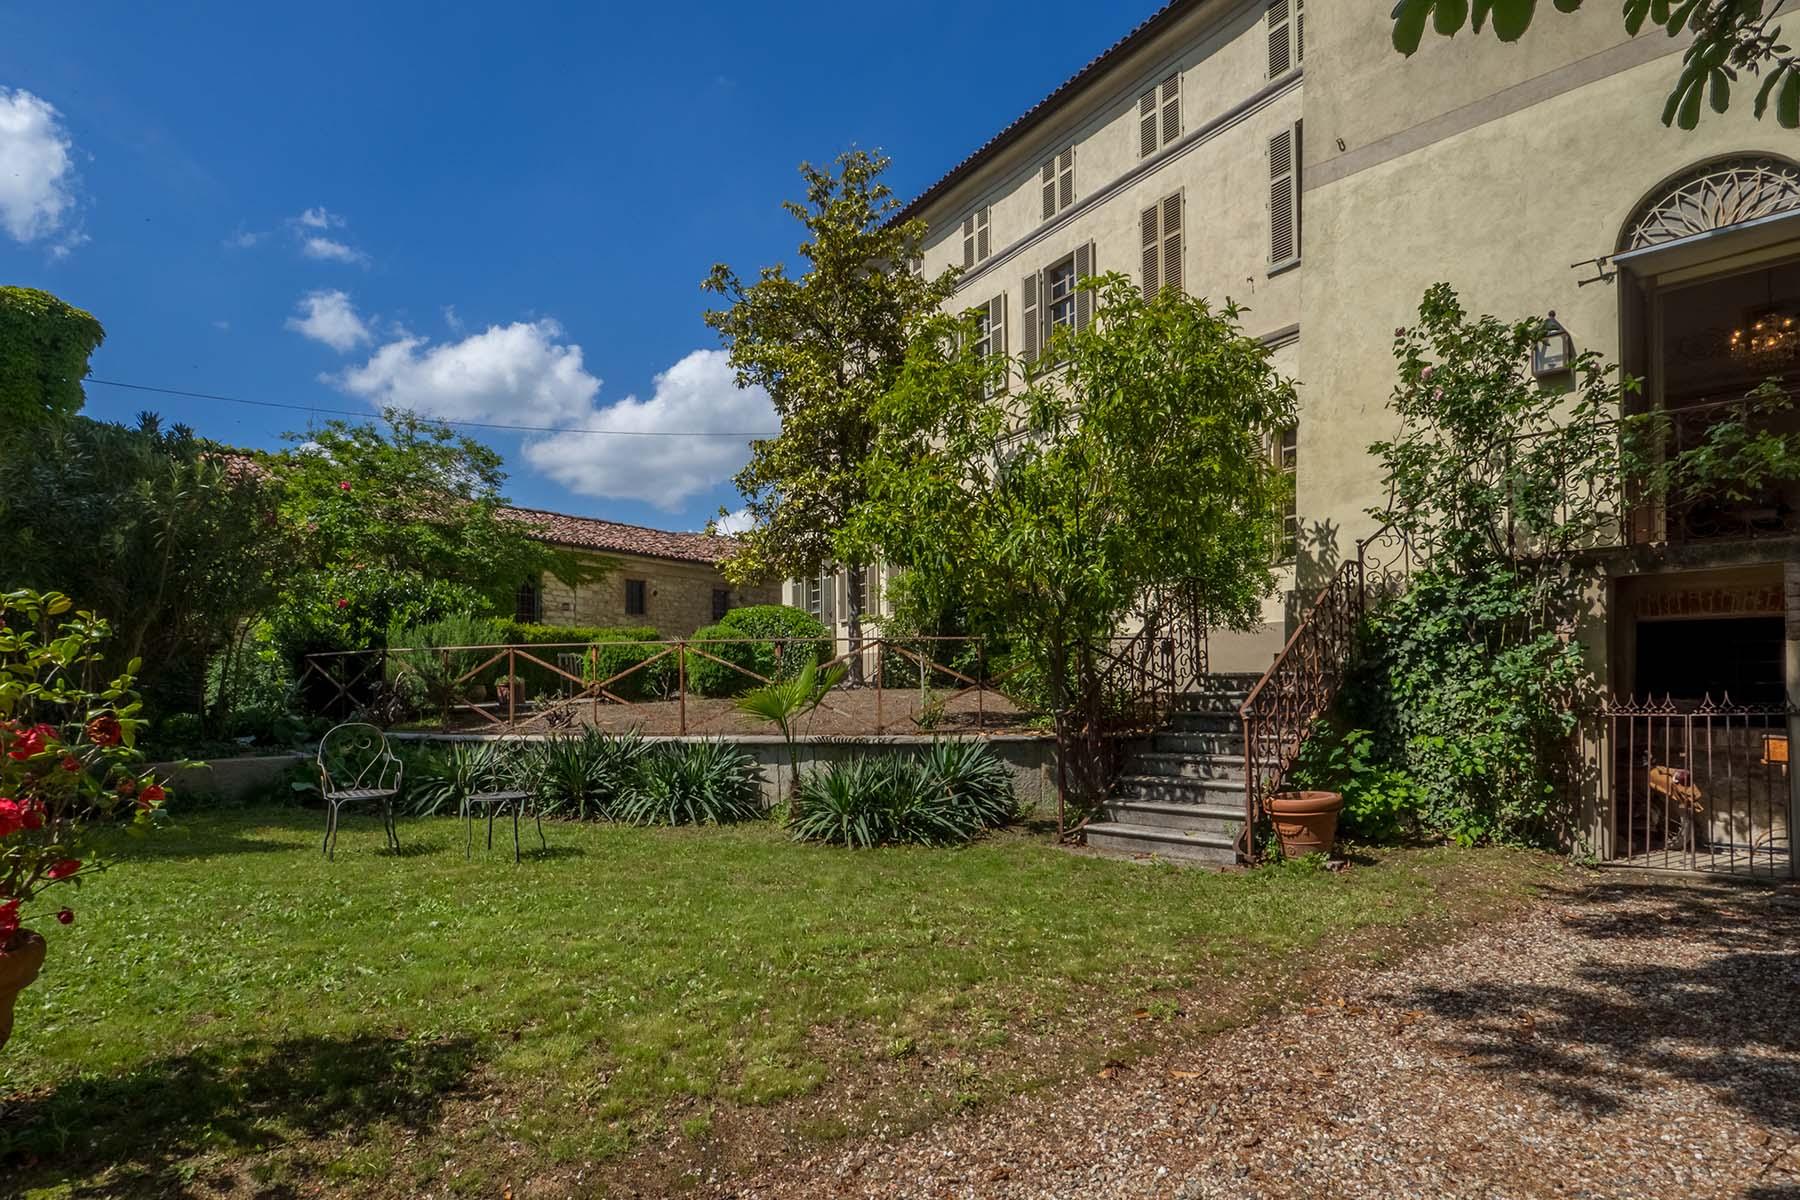 Enchanting historical villa in the heart of the Monferrato region - 12